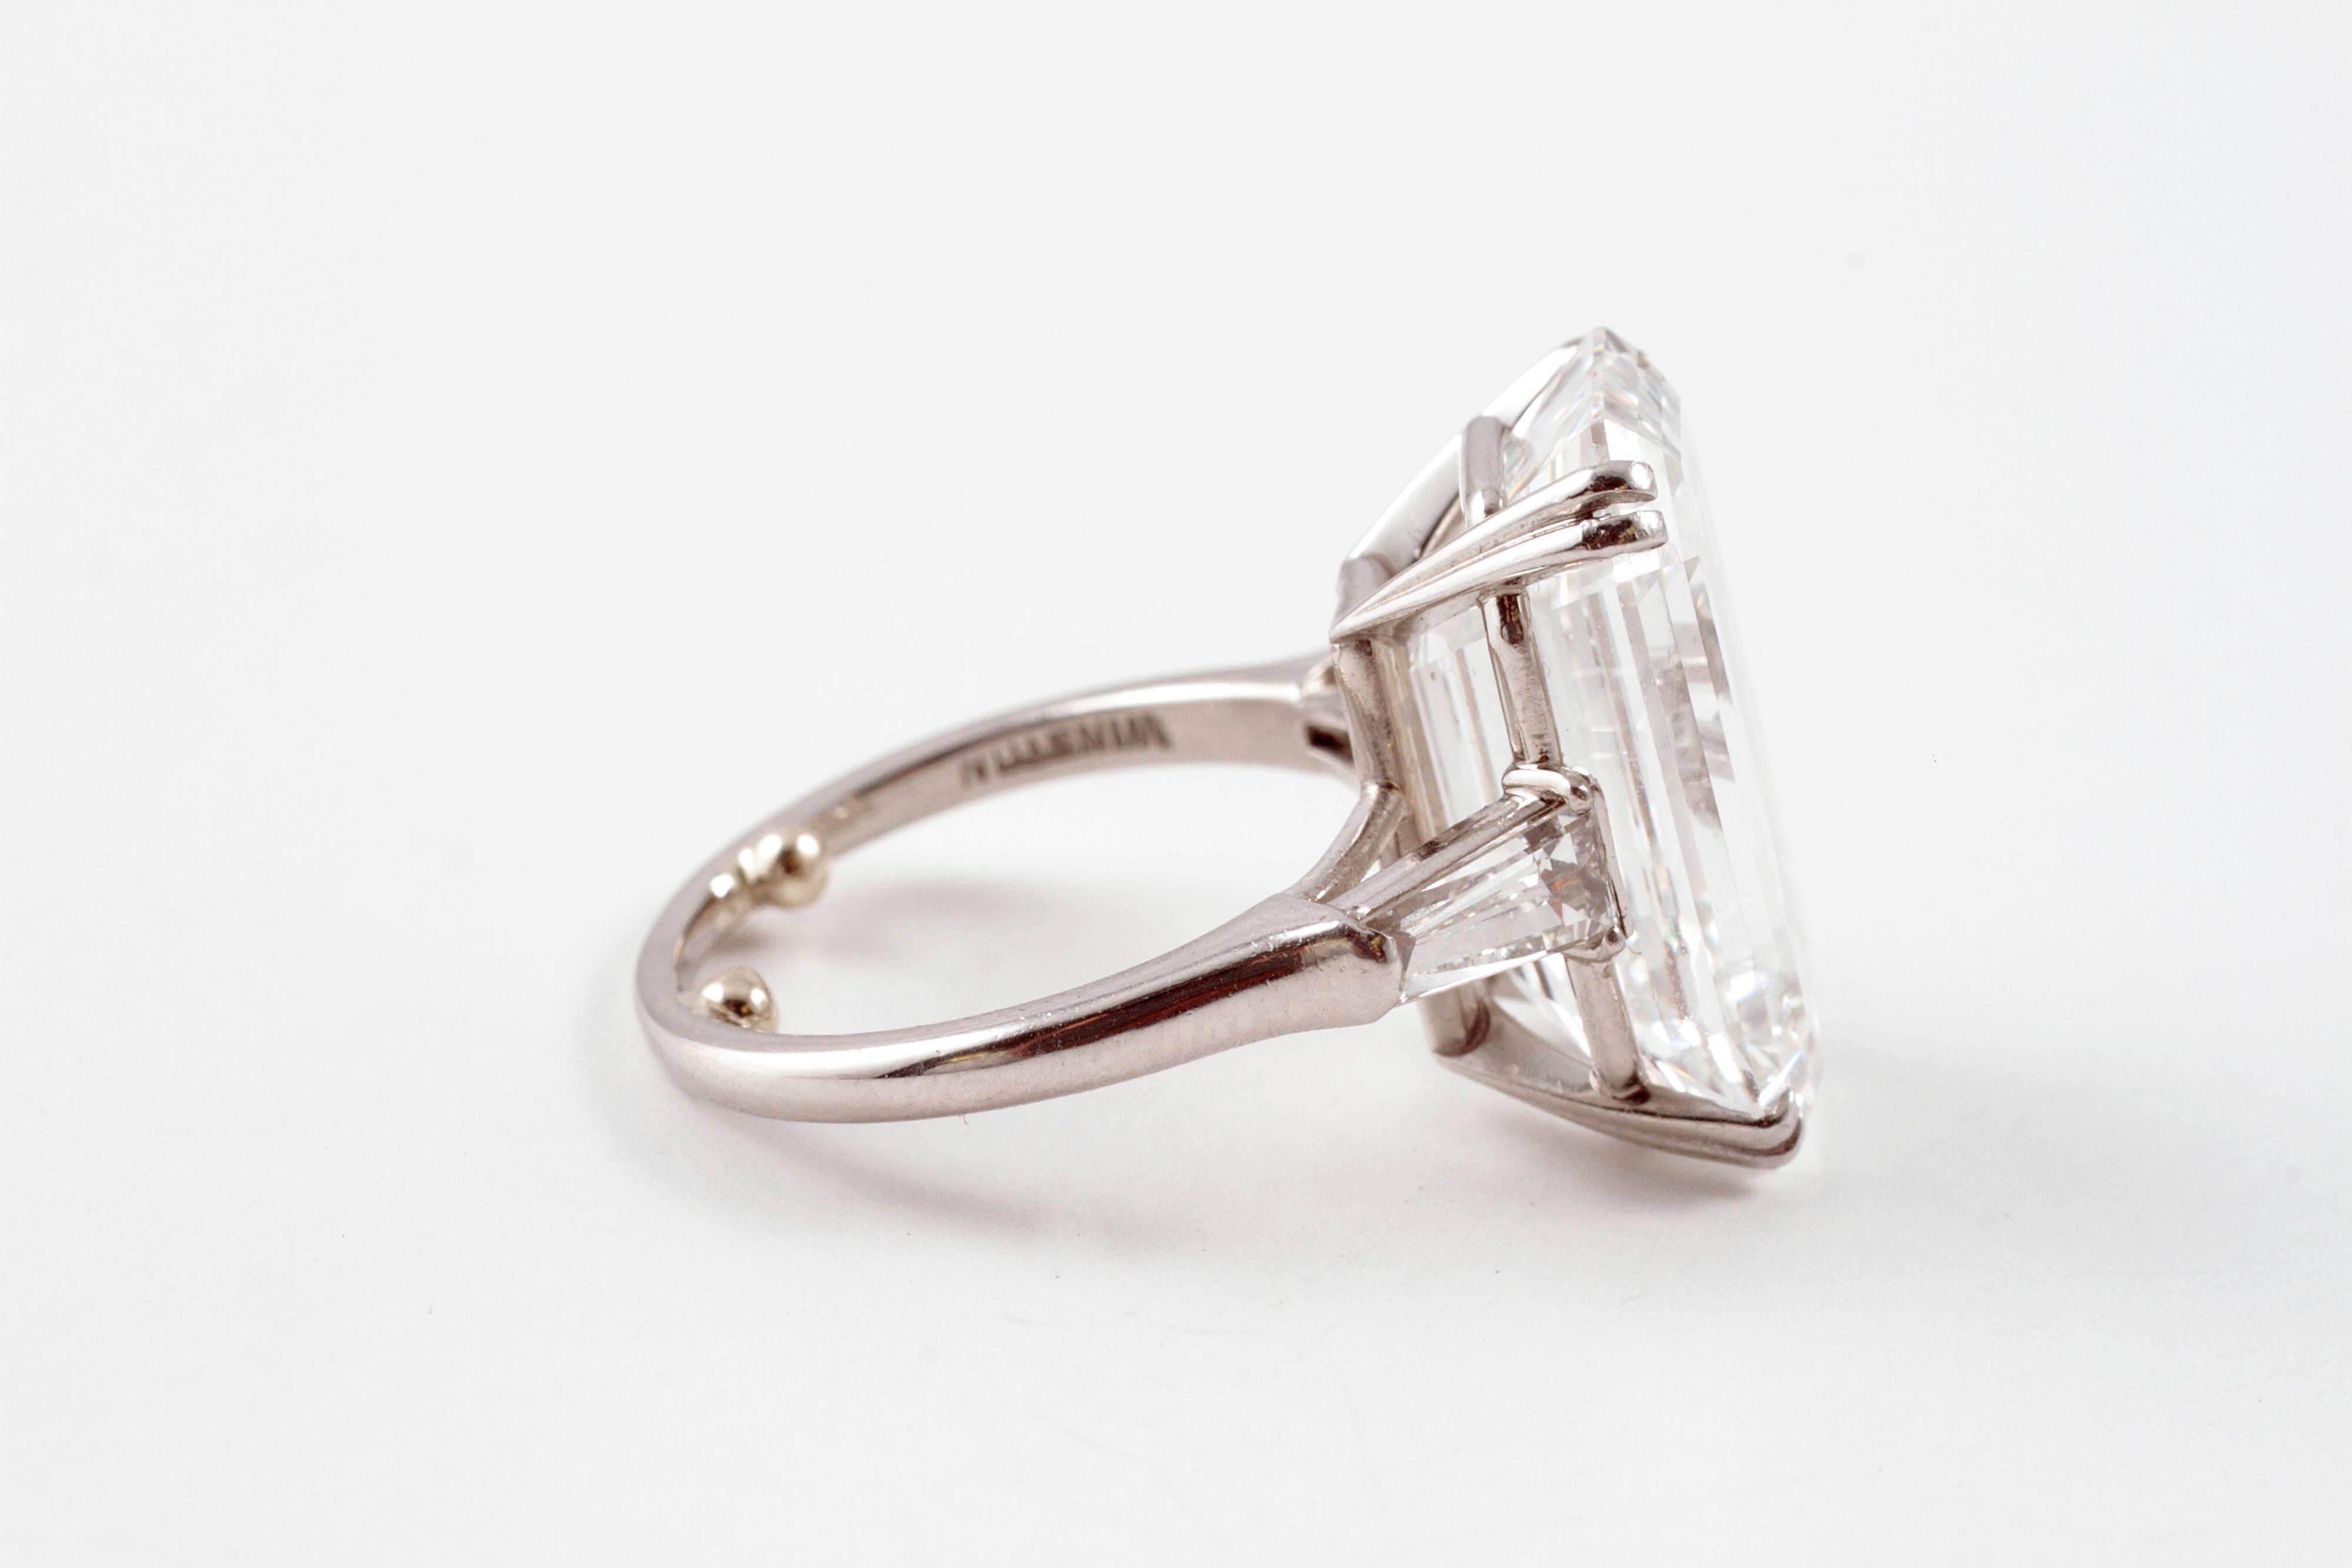 Stunning 12.01 Carat Diamond Platinum Ring by Harry Winston 2